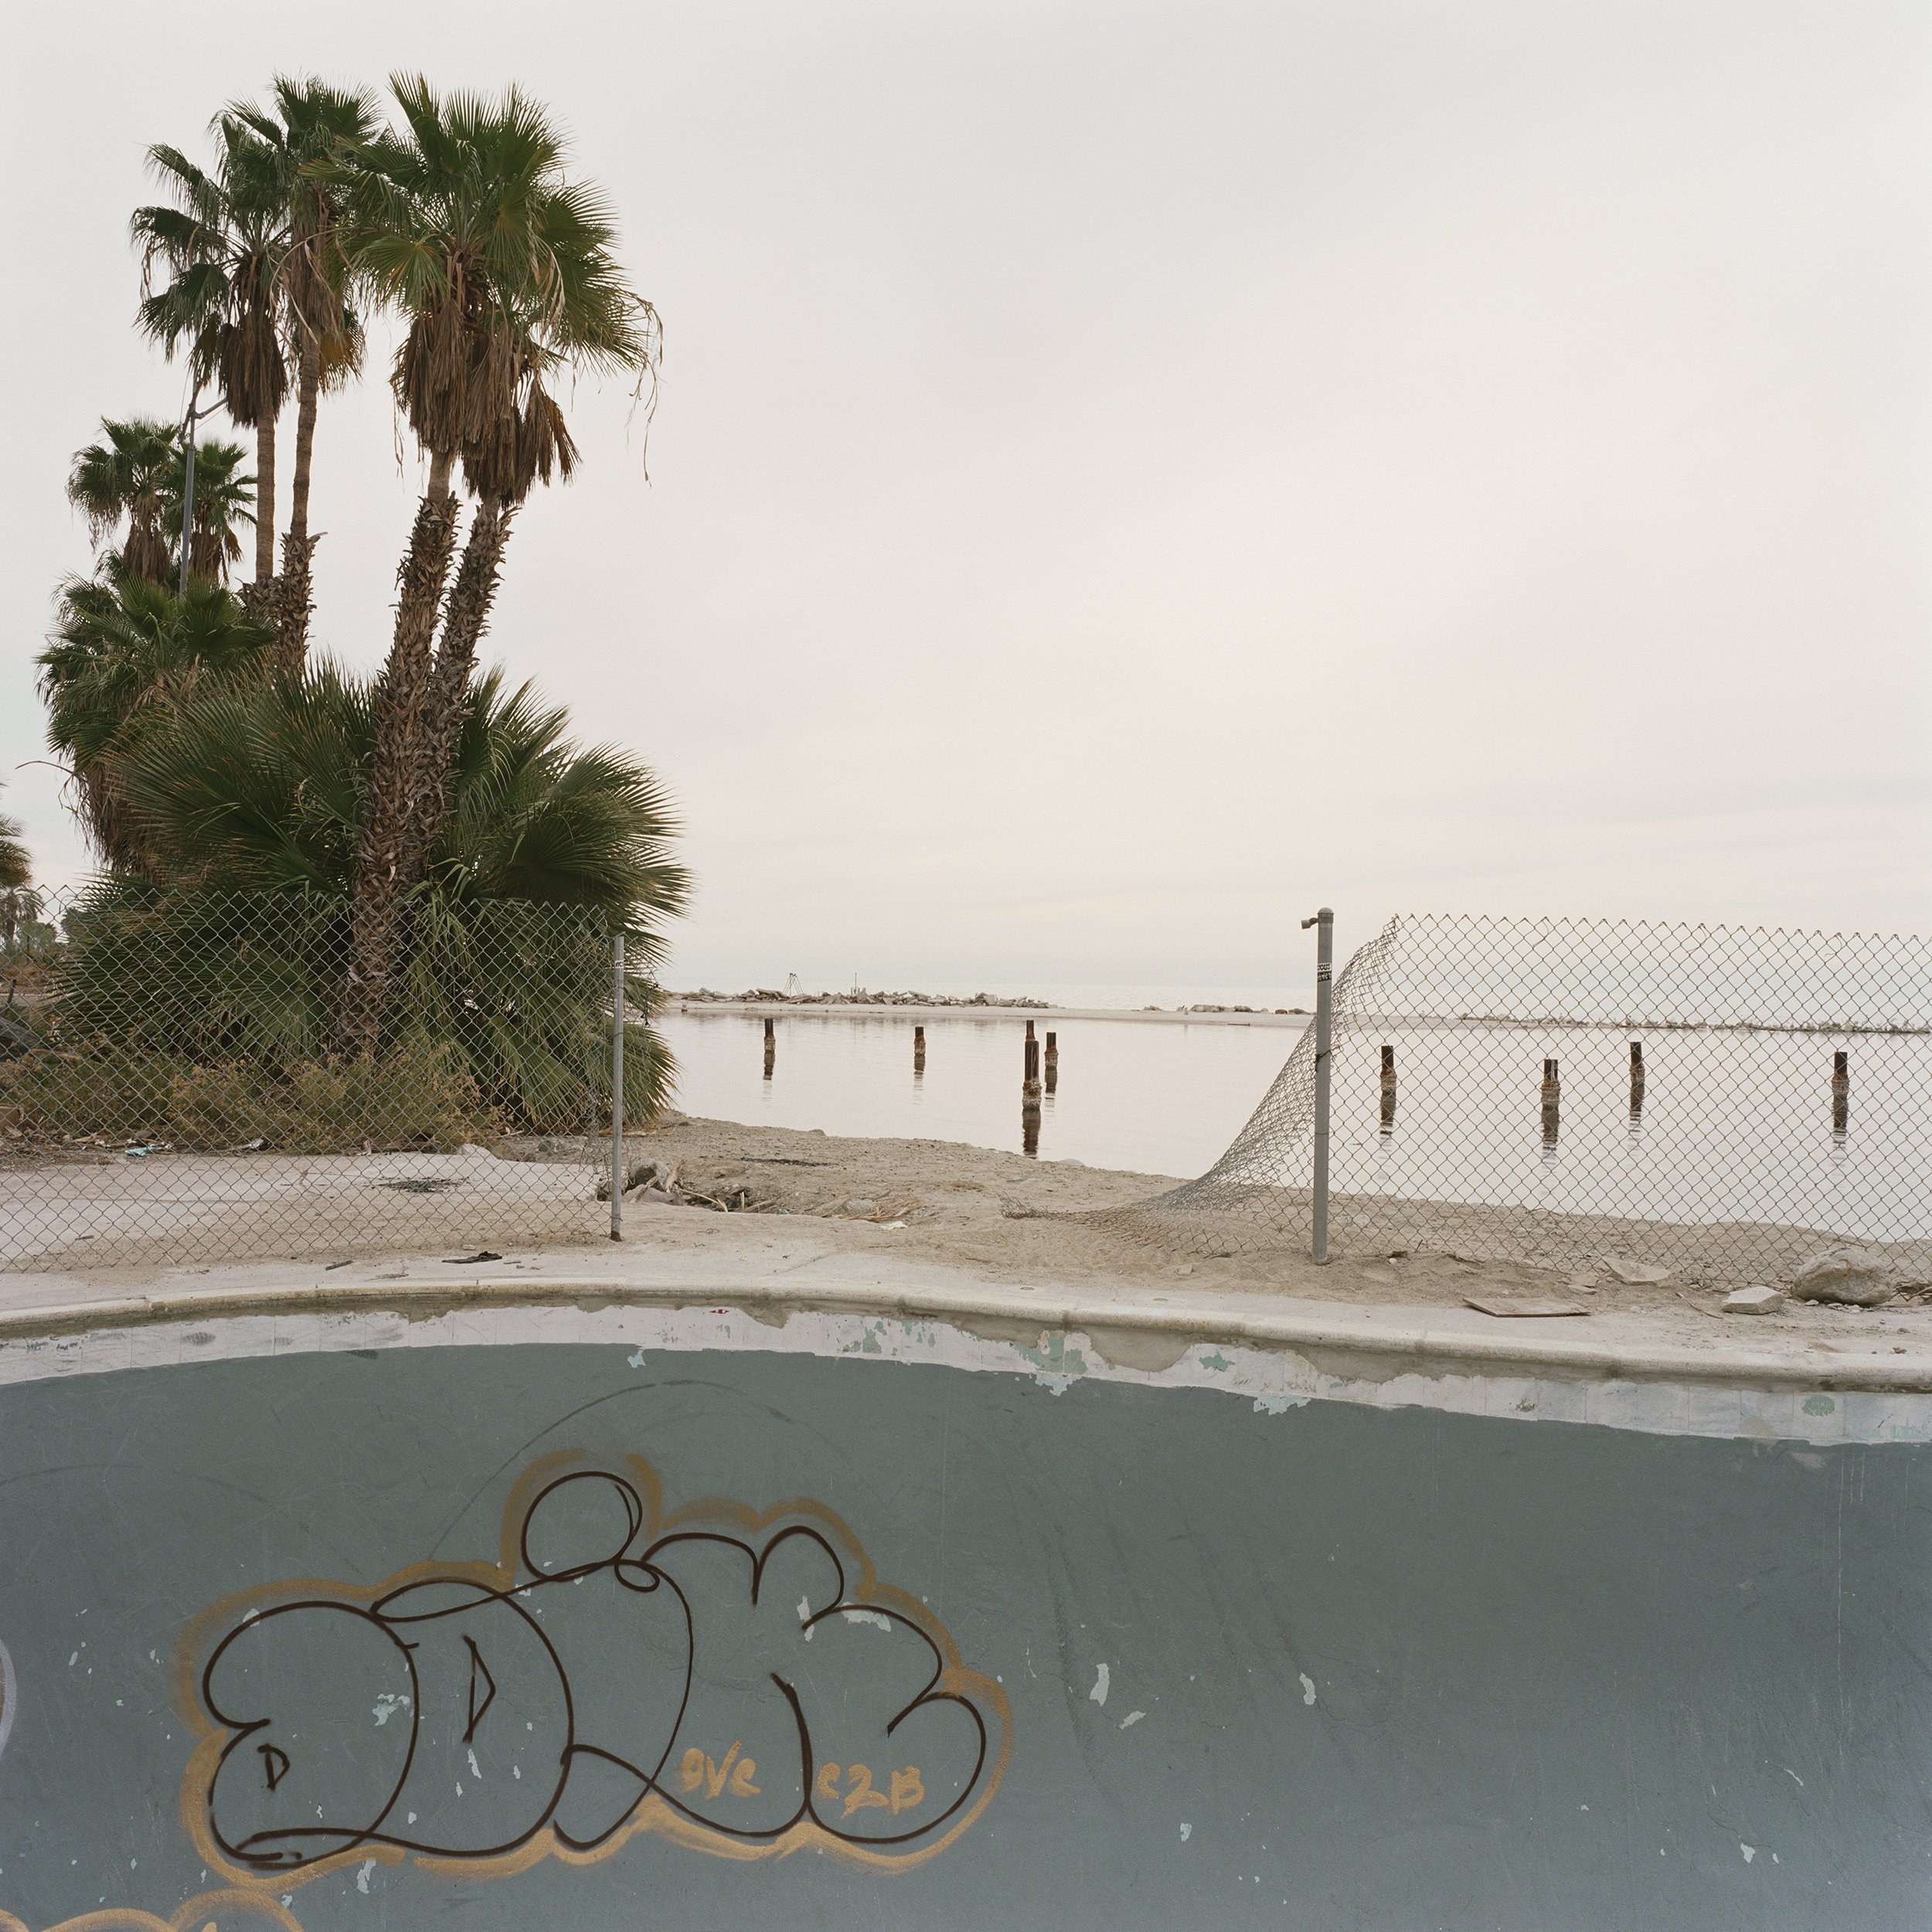  Salton Sea, California 2006 